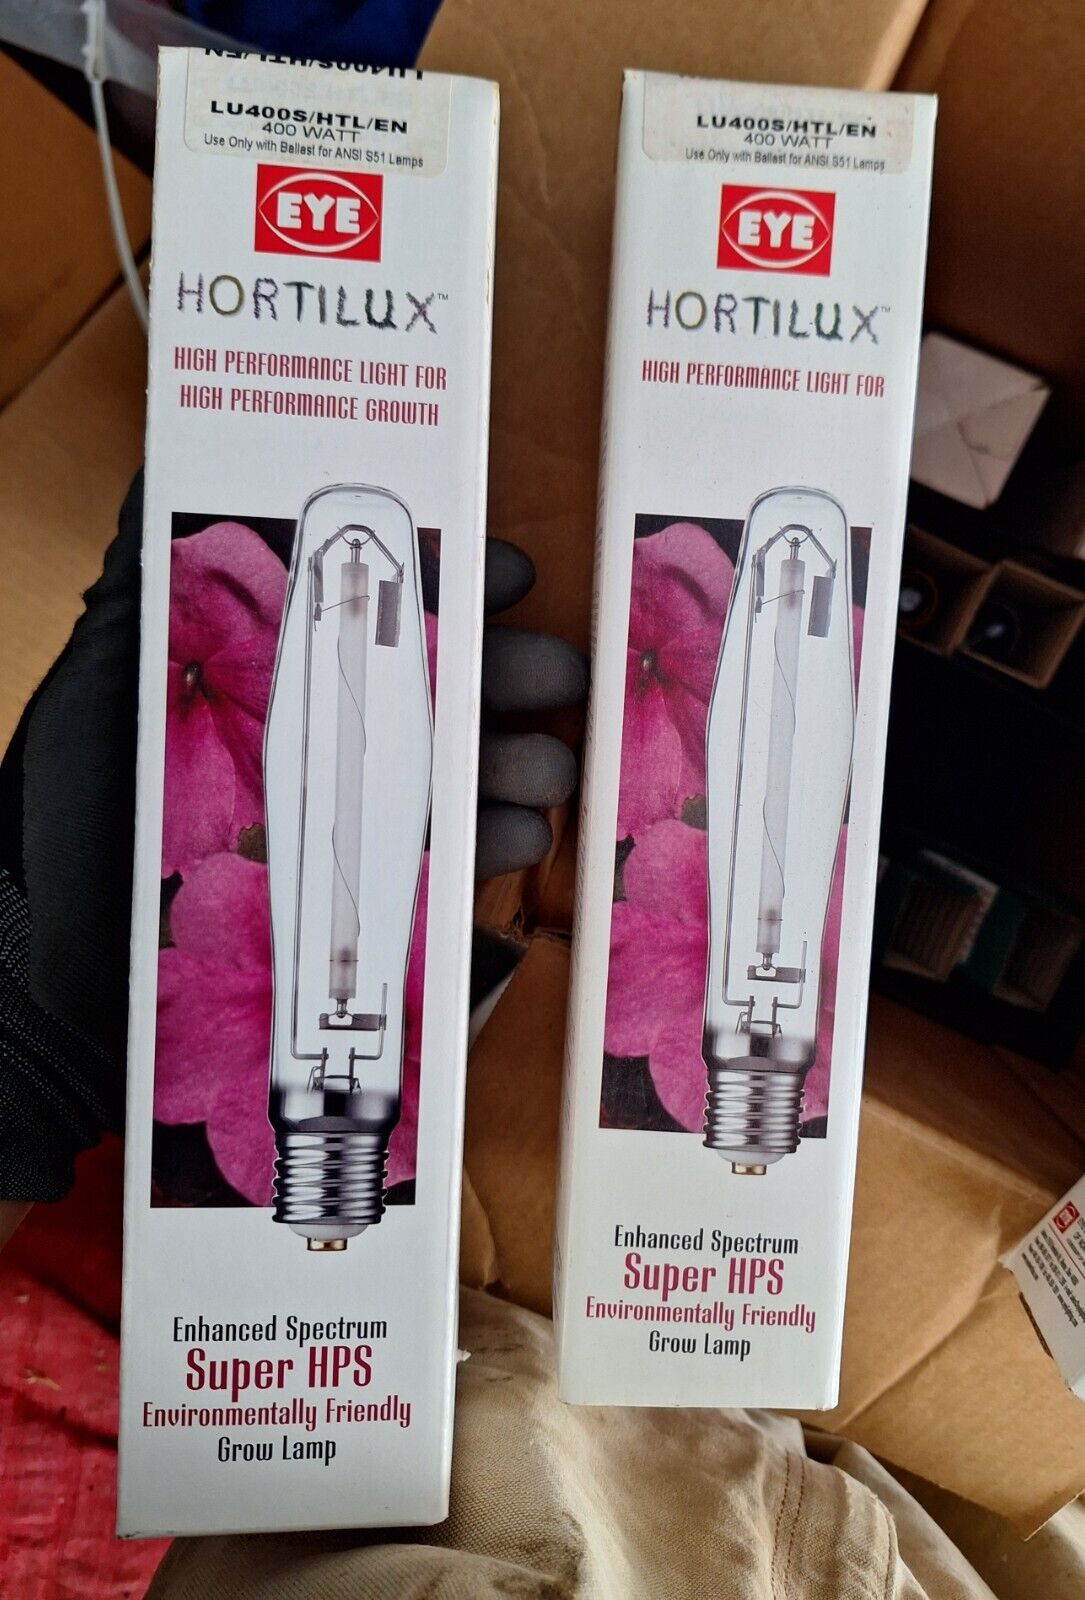 Hortilux 400 watt Super HPS Grow Lamp. New, Never Used